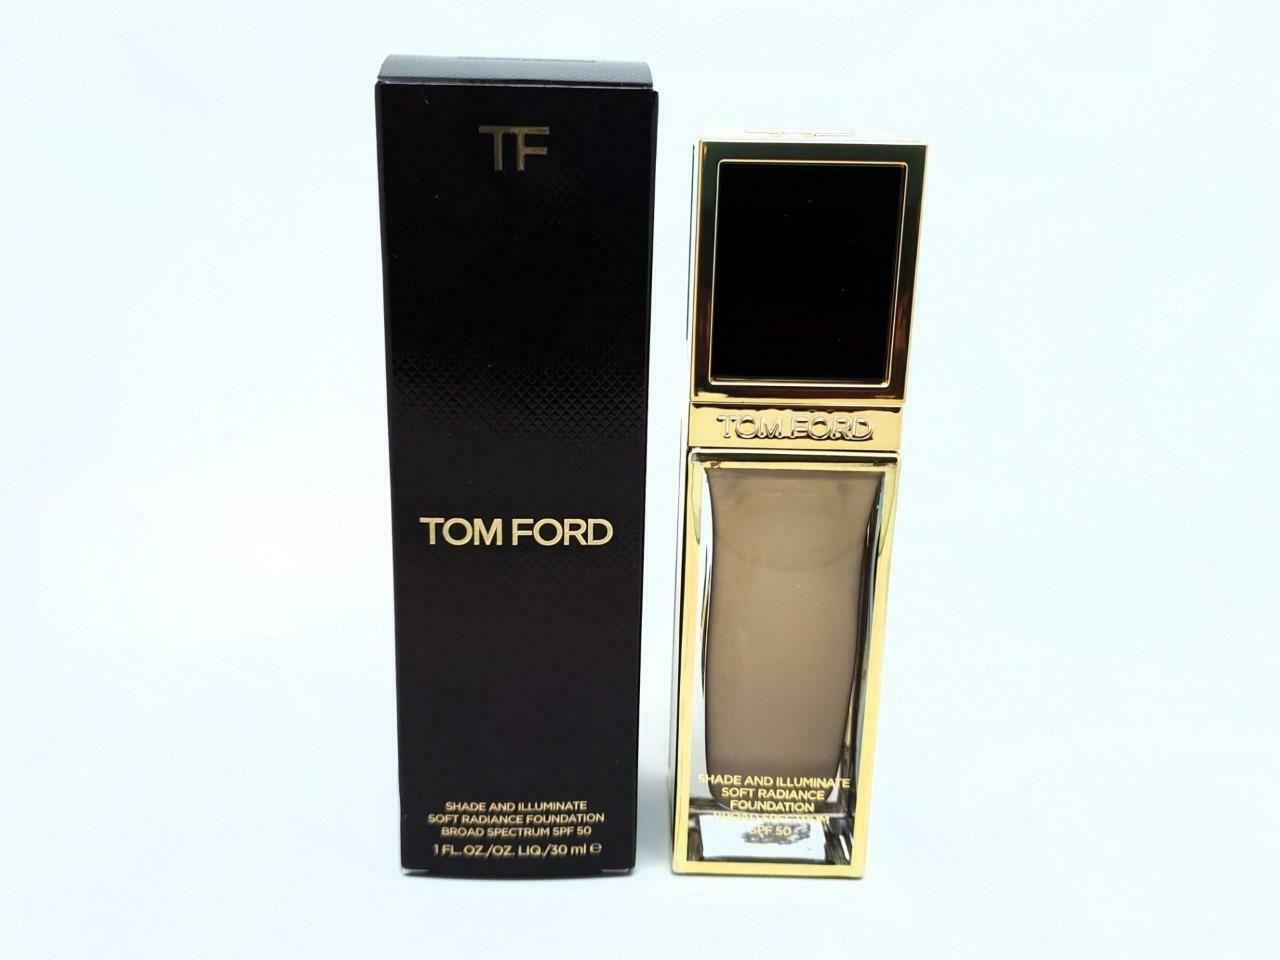 Primary image for Tom Ford shade & illuminate soft radiance foundation 7.5 shell beige